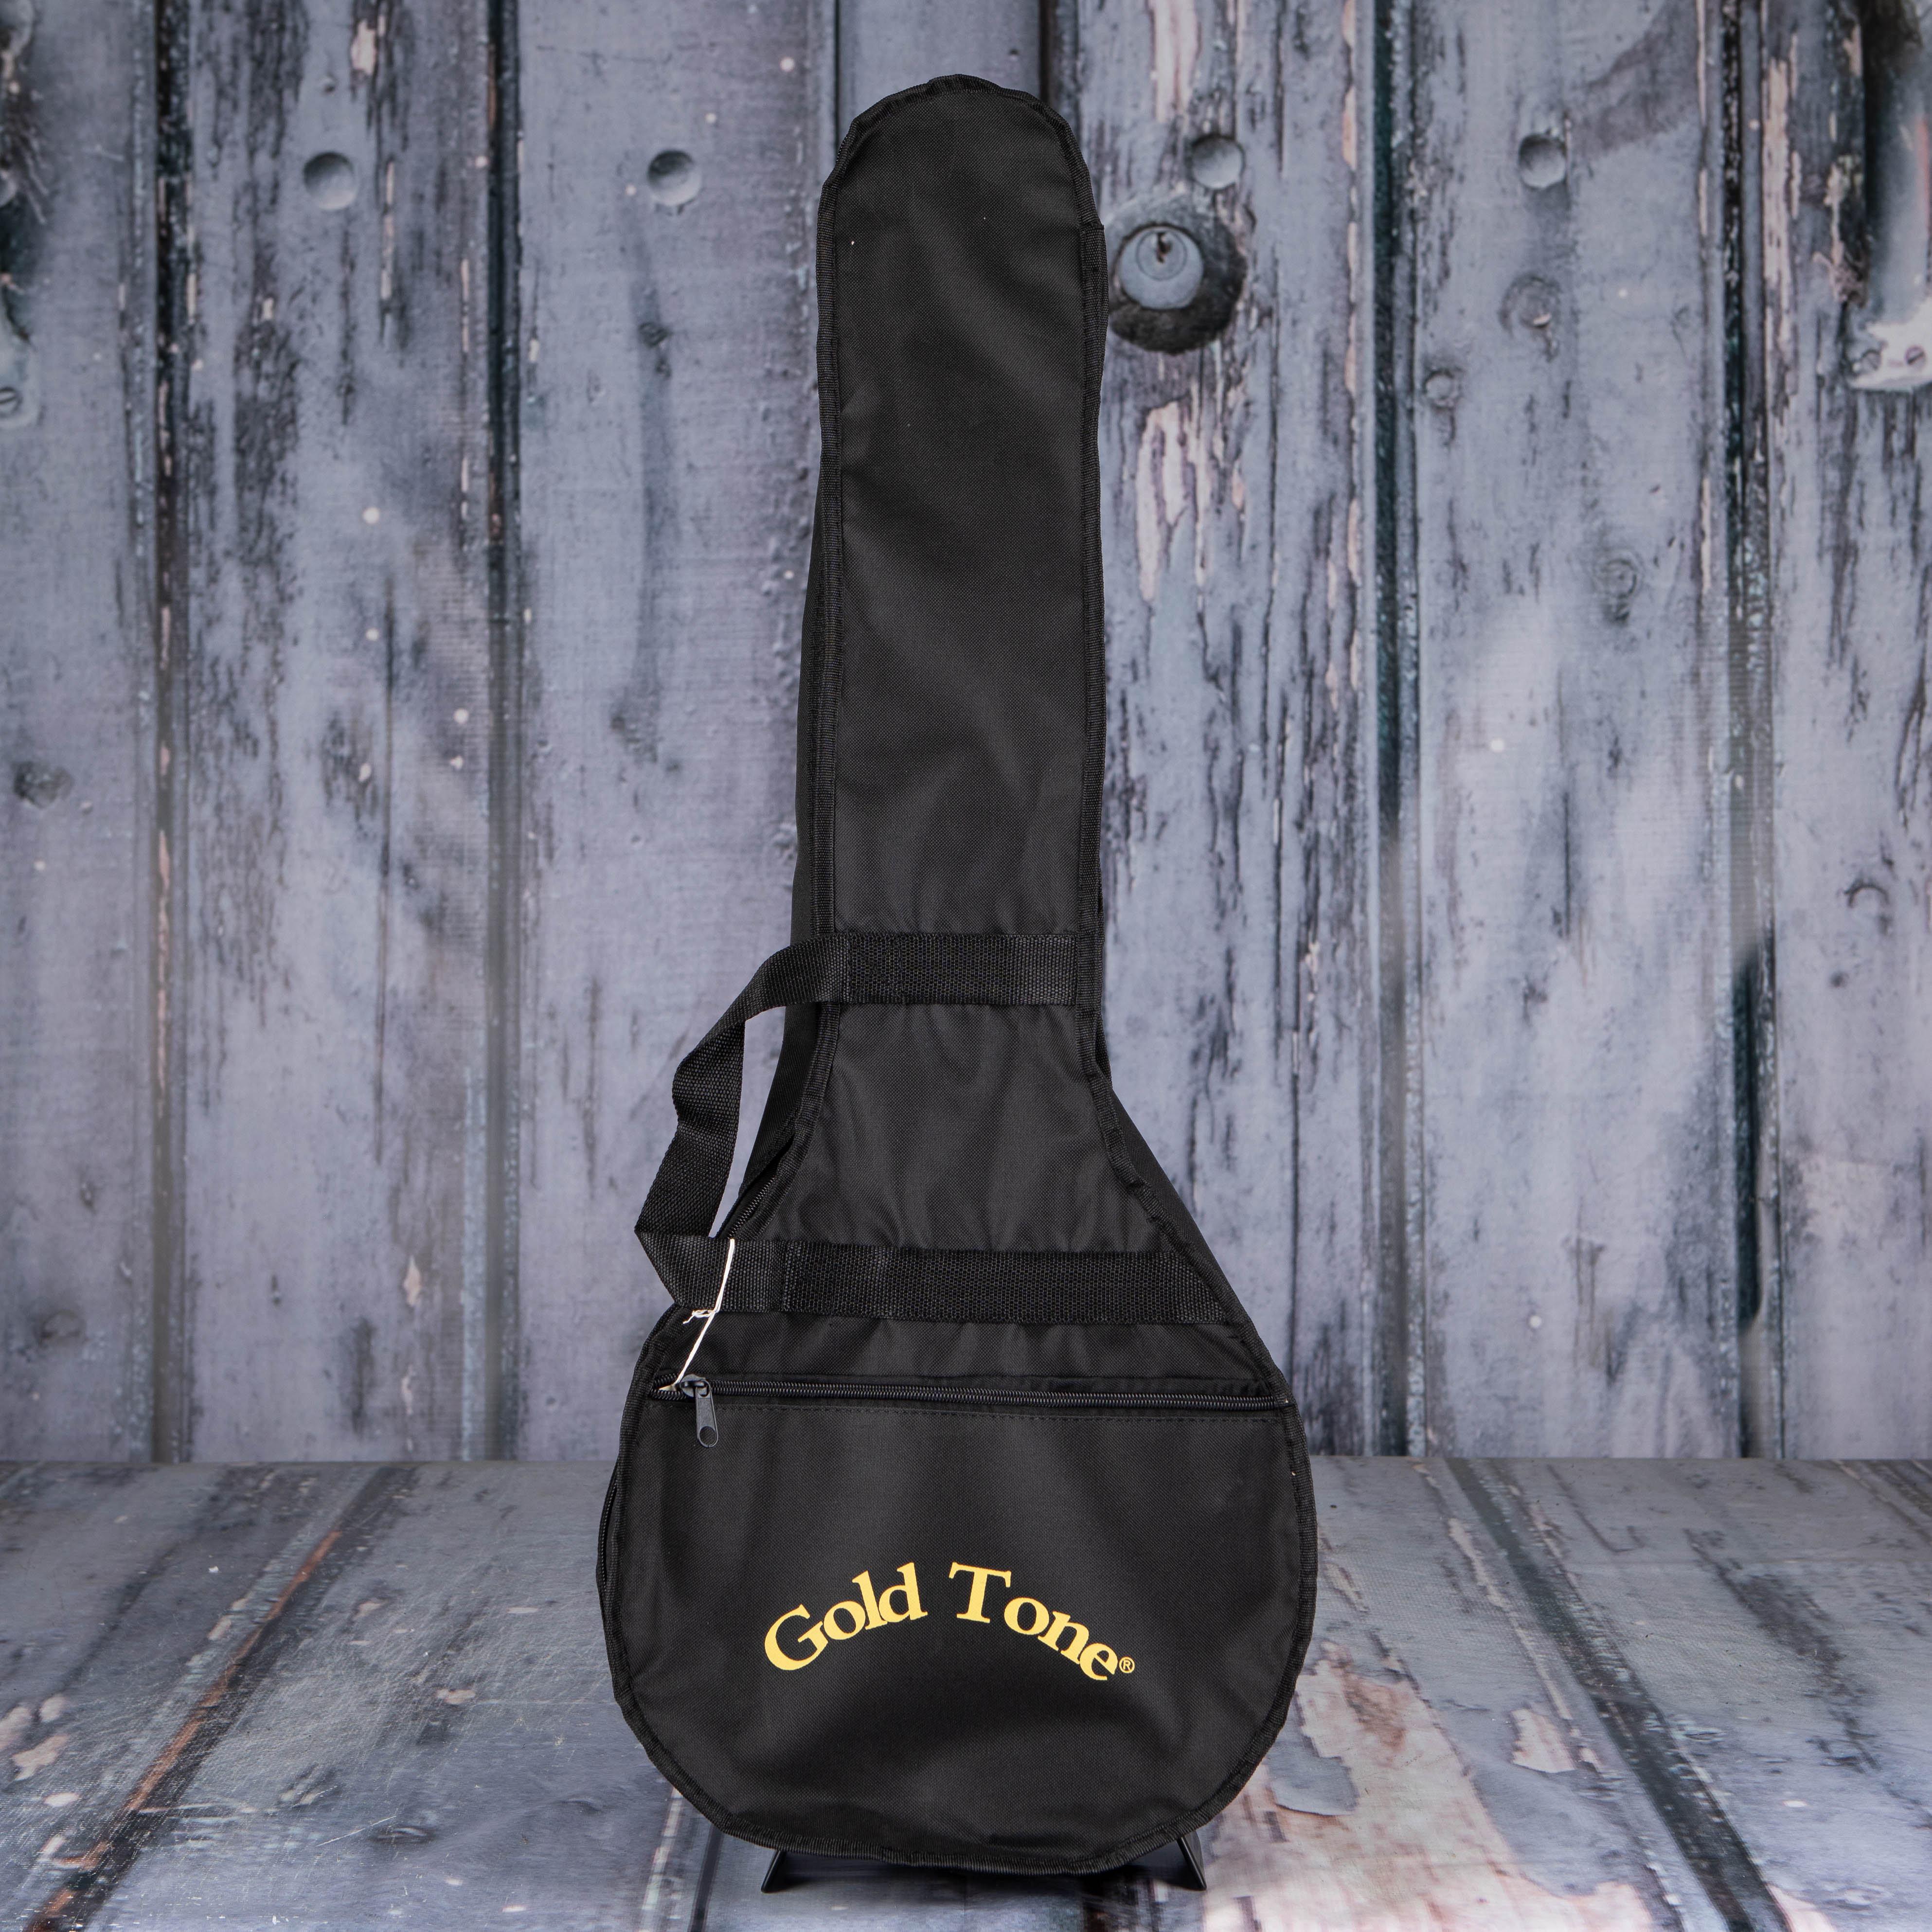 Gold Tone AC-Traveler Acoustic Composite Banjo, Satin Black, bag